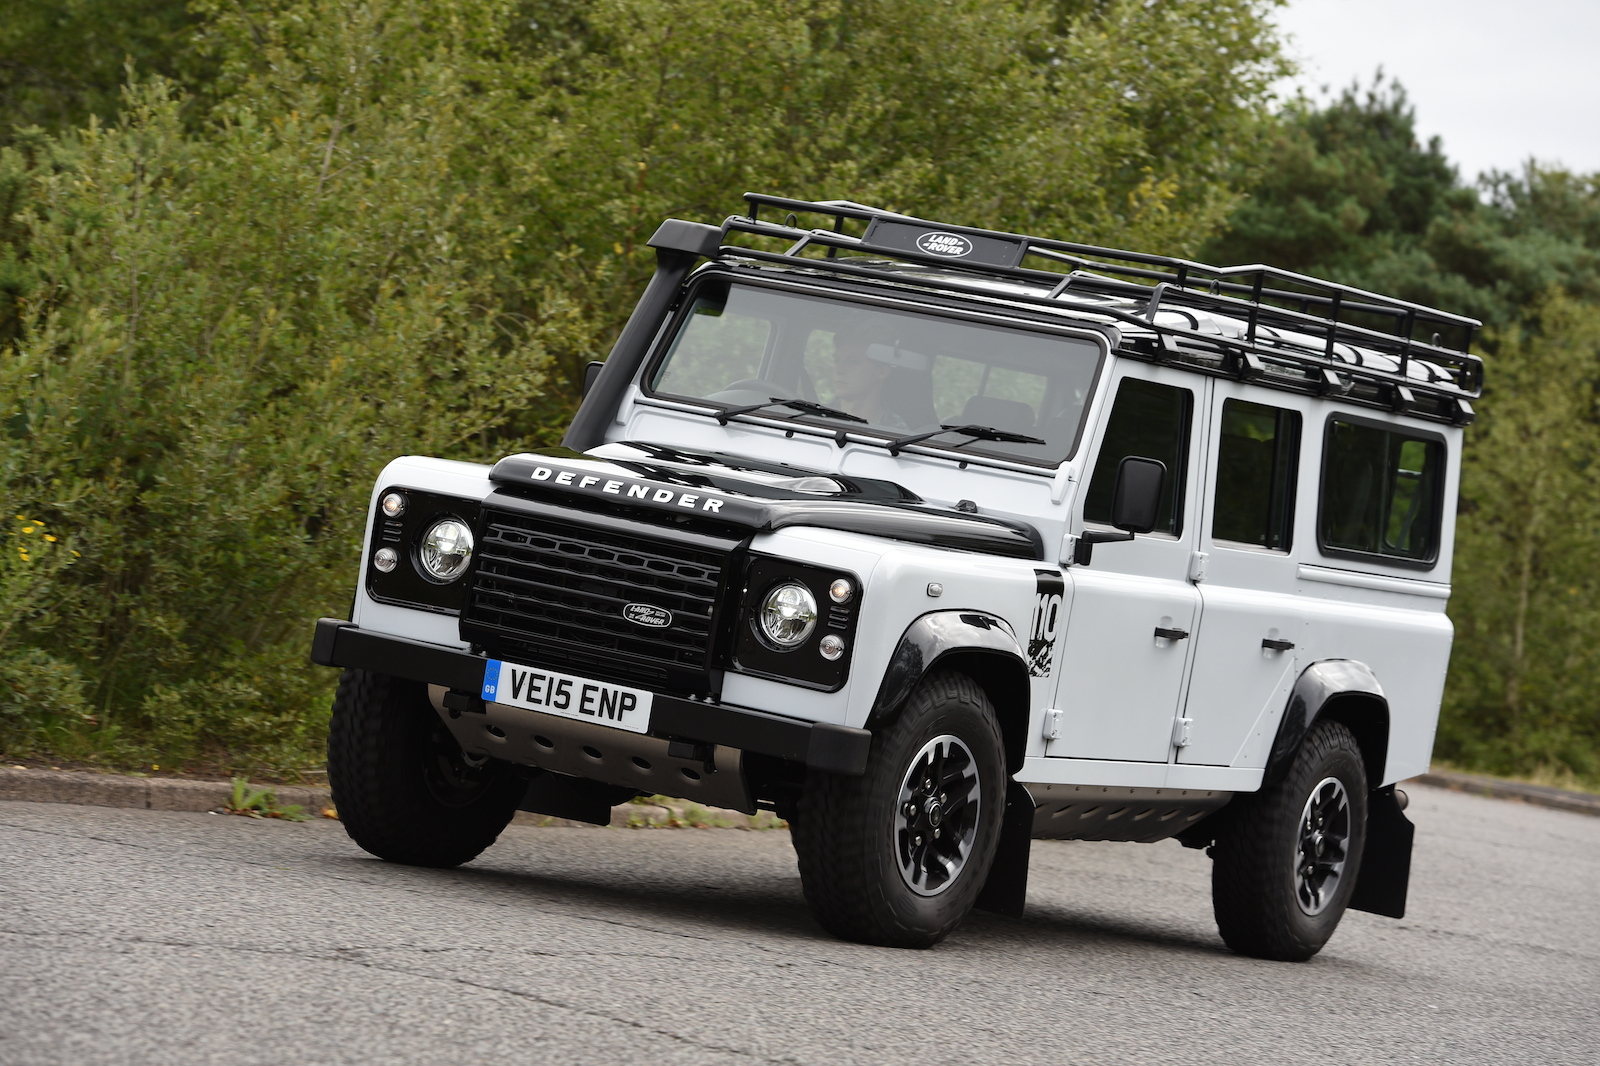 vis Mitt George Bernard 2015 Land Rover Defender 110 Adventure UK first drive | Autocar